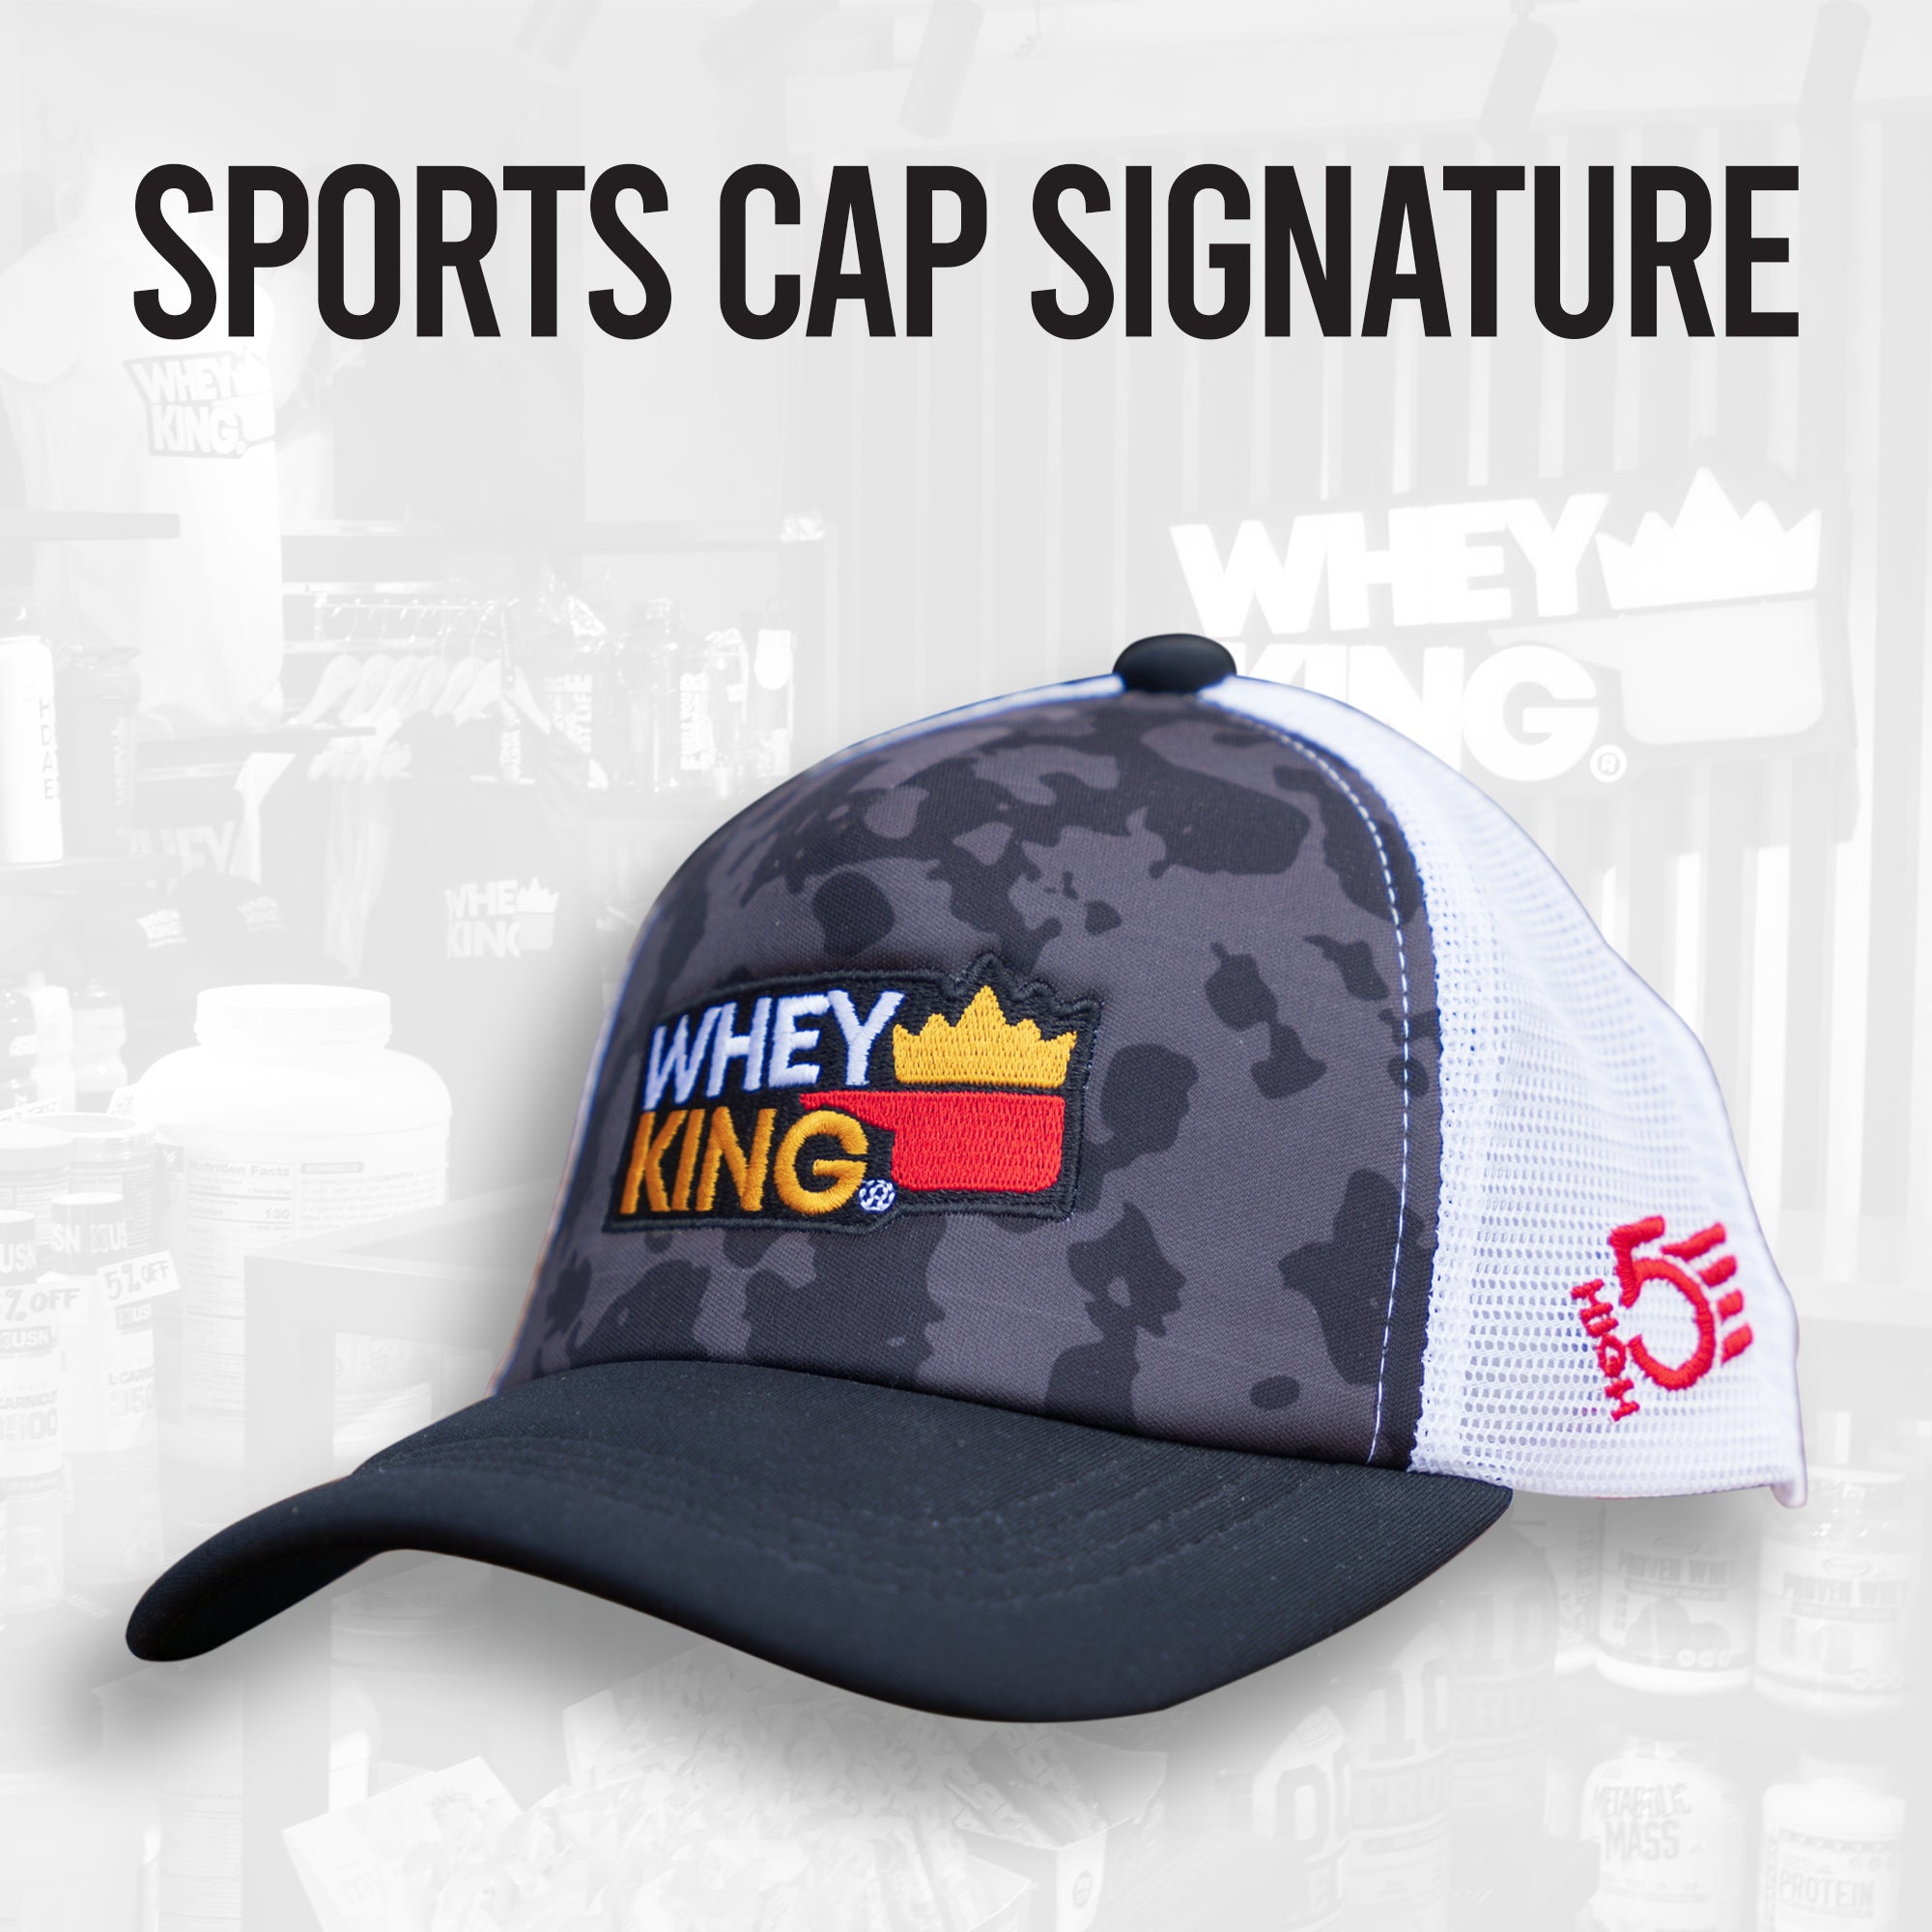 Whey King Sports Cap Signature